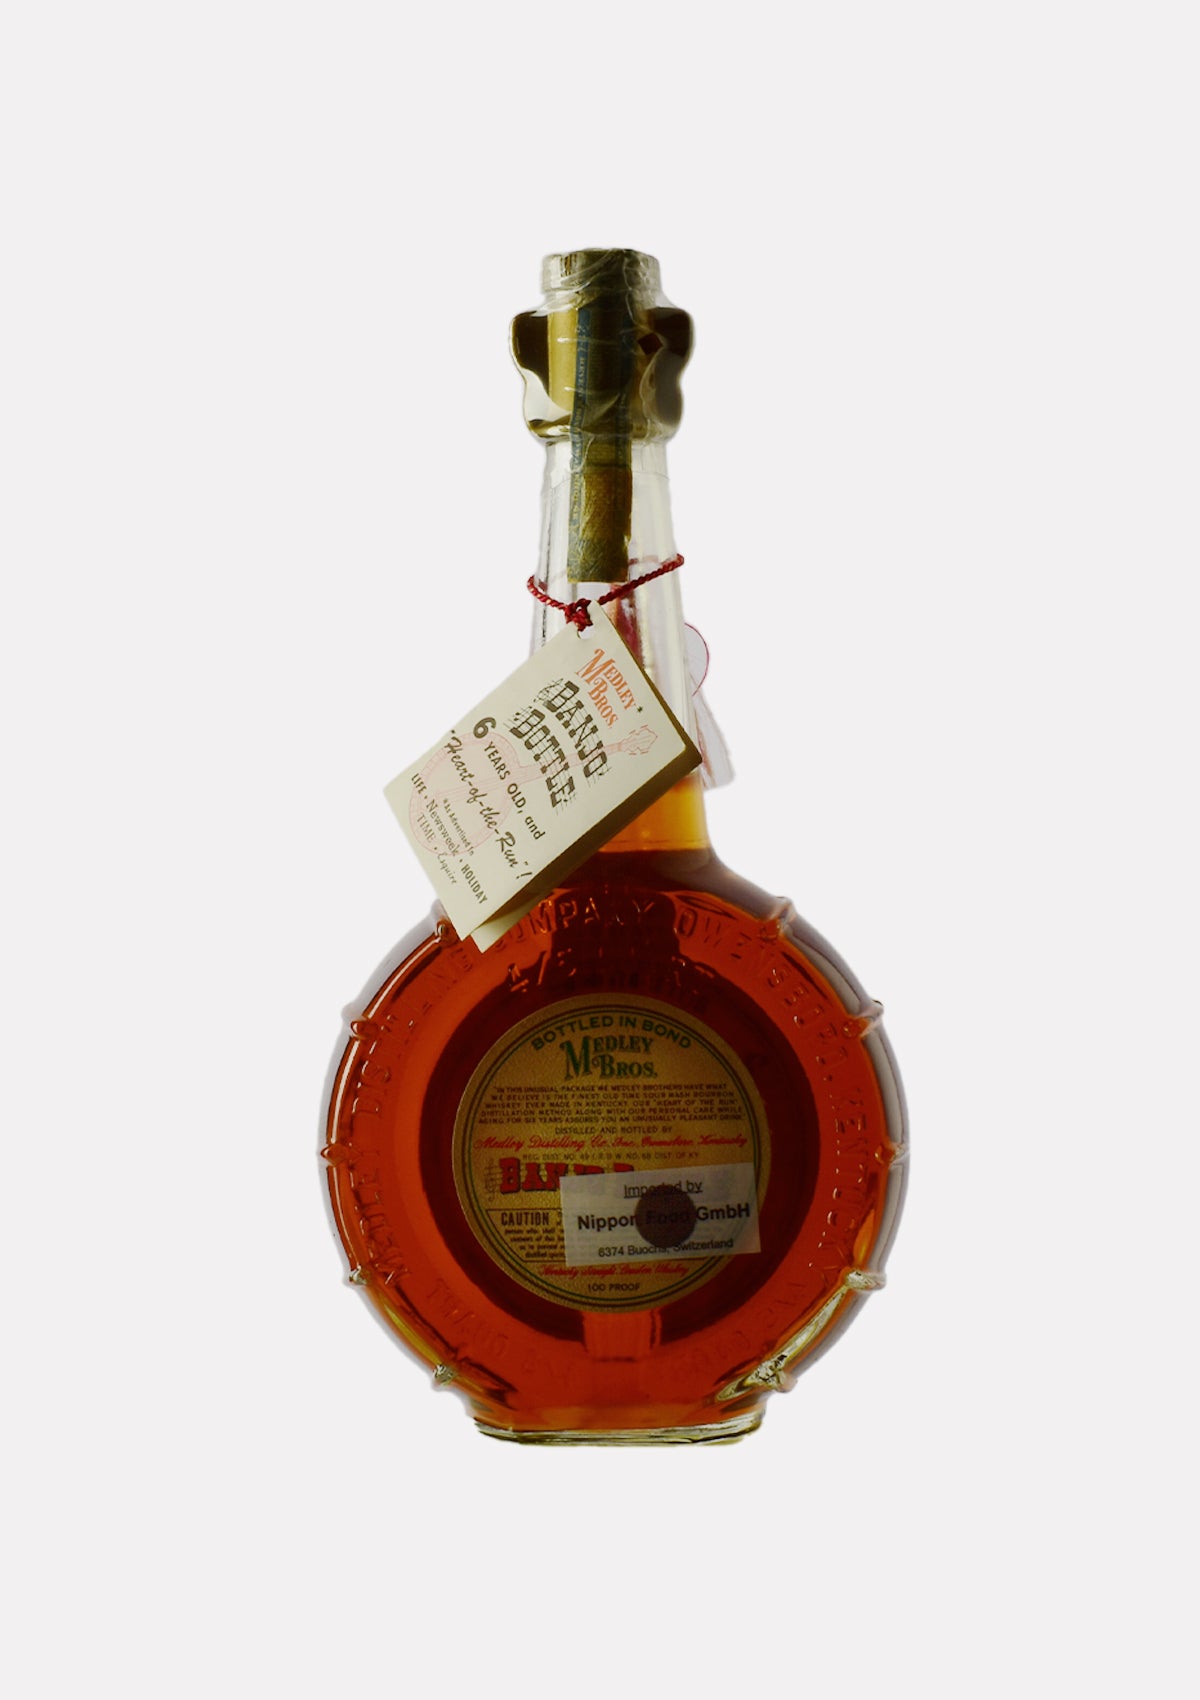 Medley Bros. Banjo Bottle Kentucky Straight Bourbon Whiskey 6 years